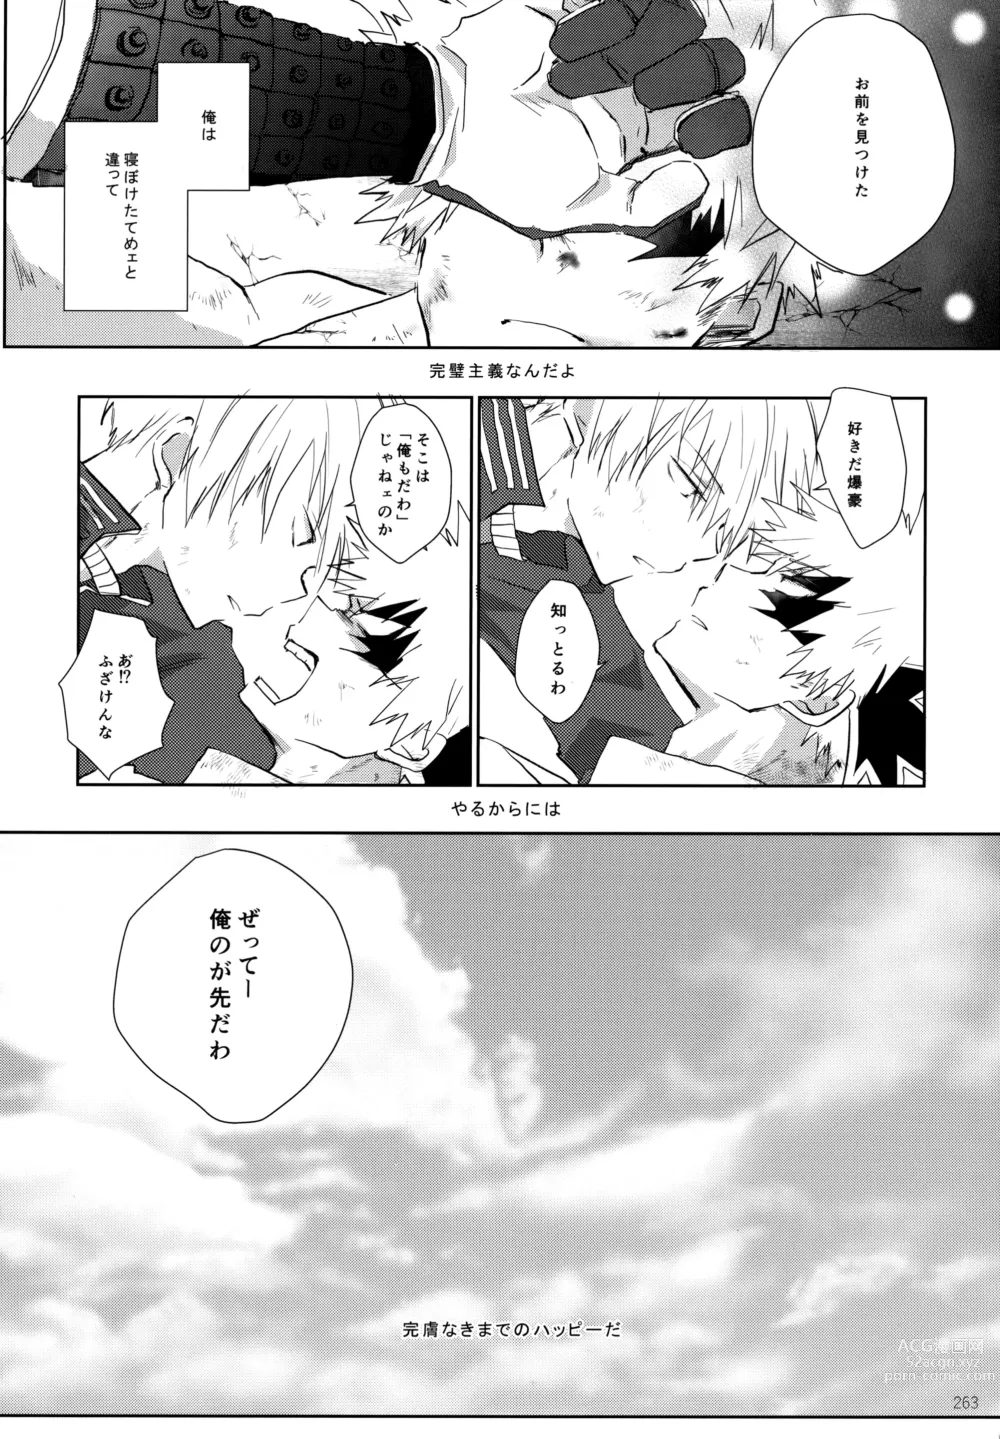 Page 263 of doujinshi Re:Chilled TDBK 2